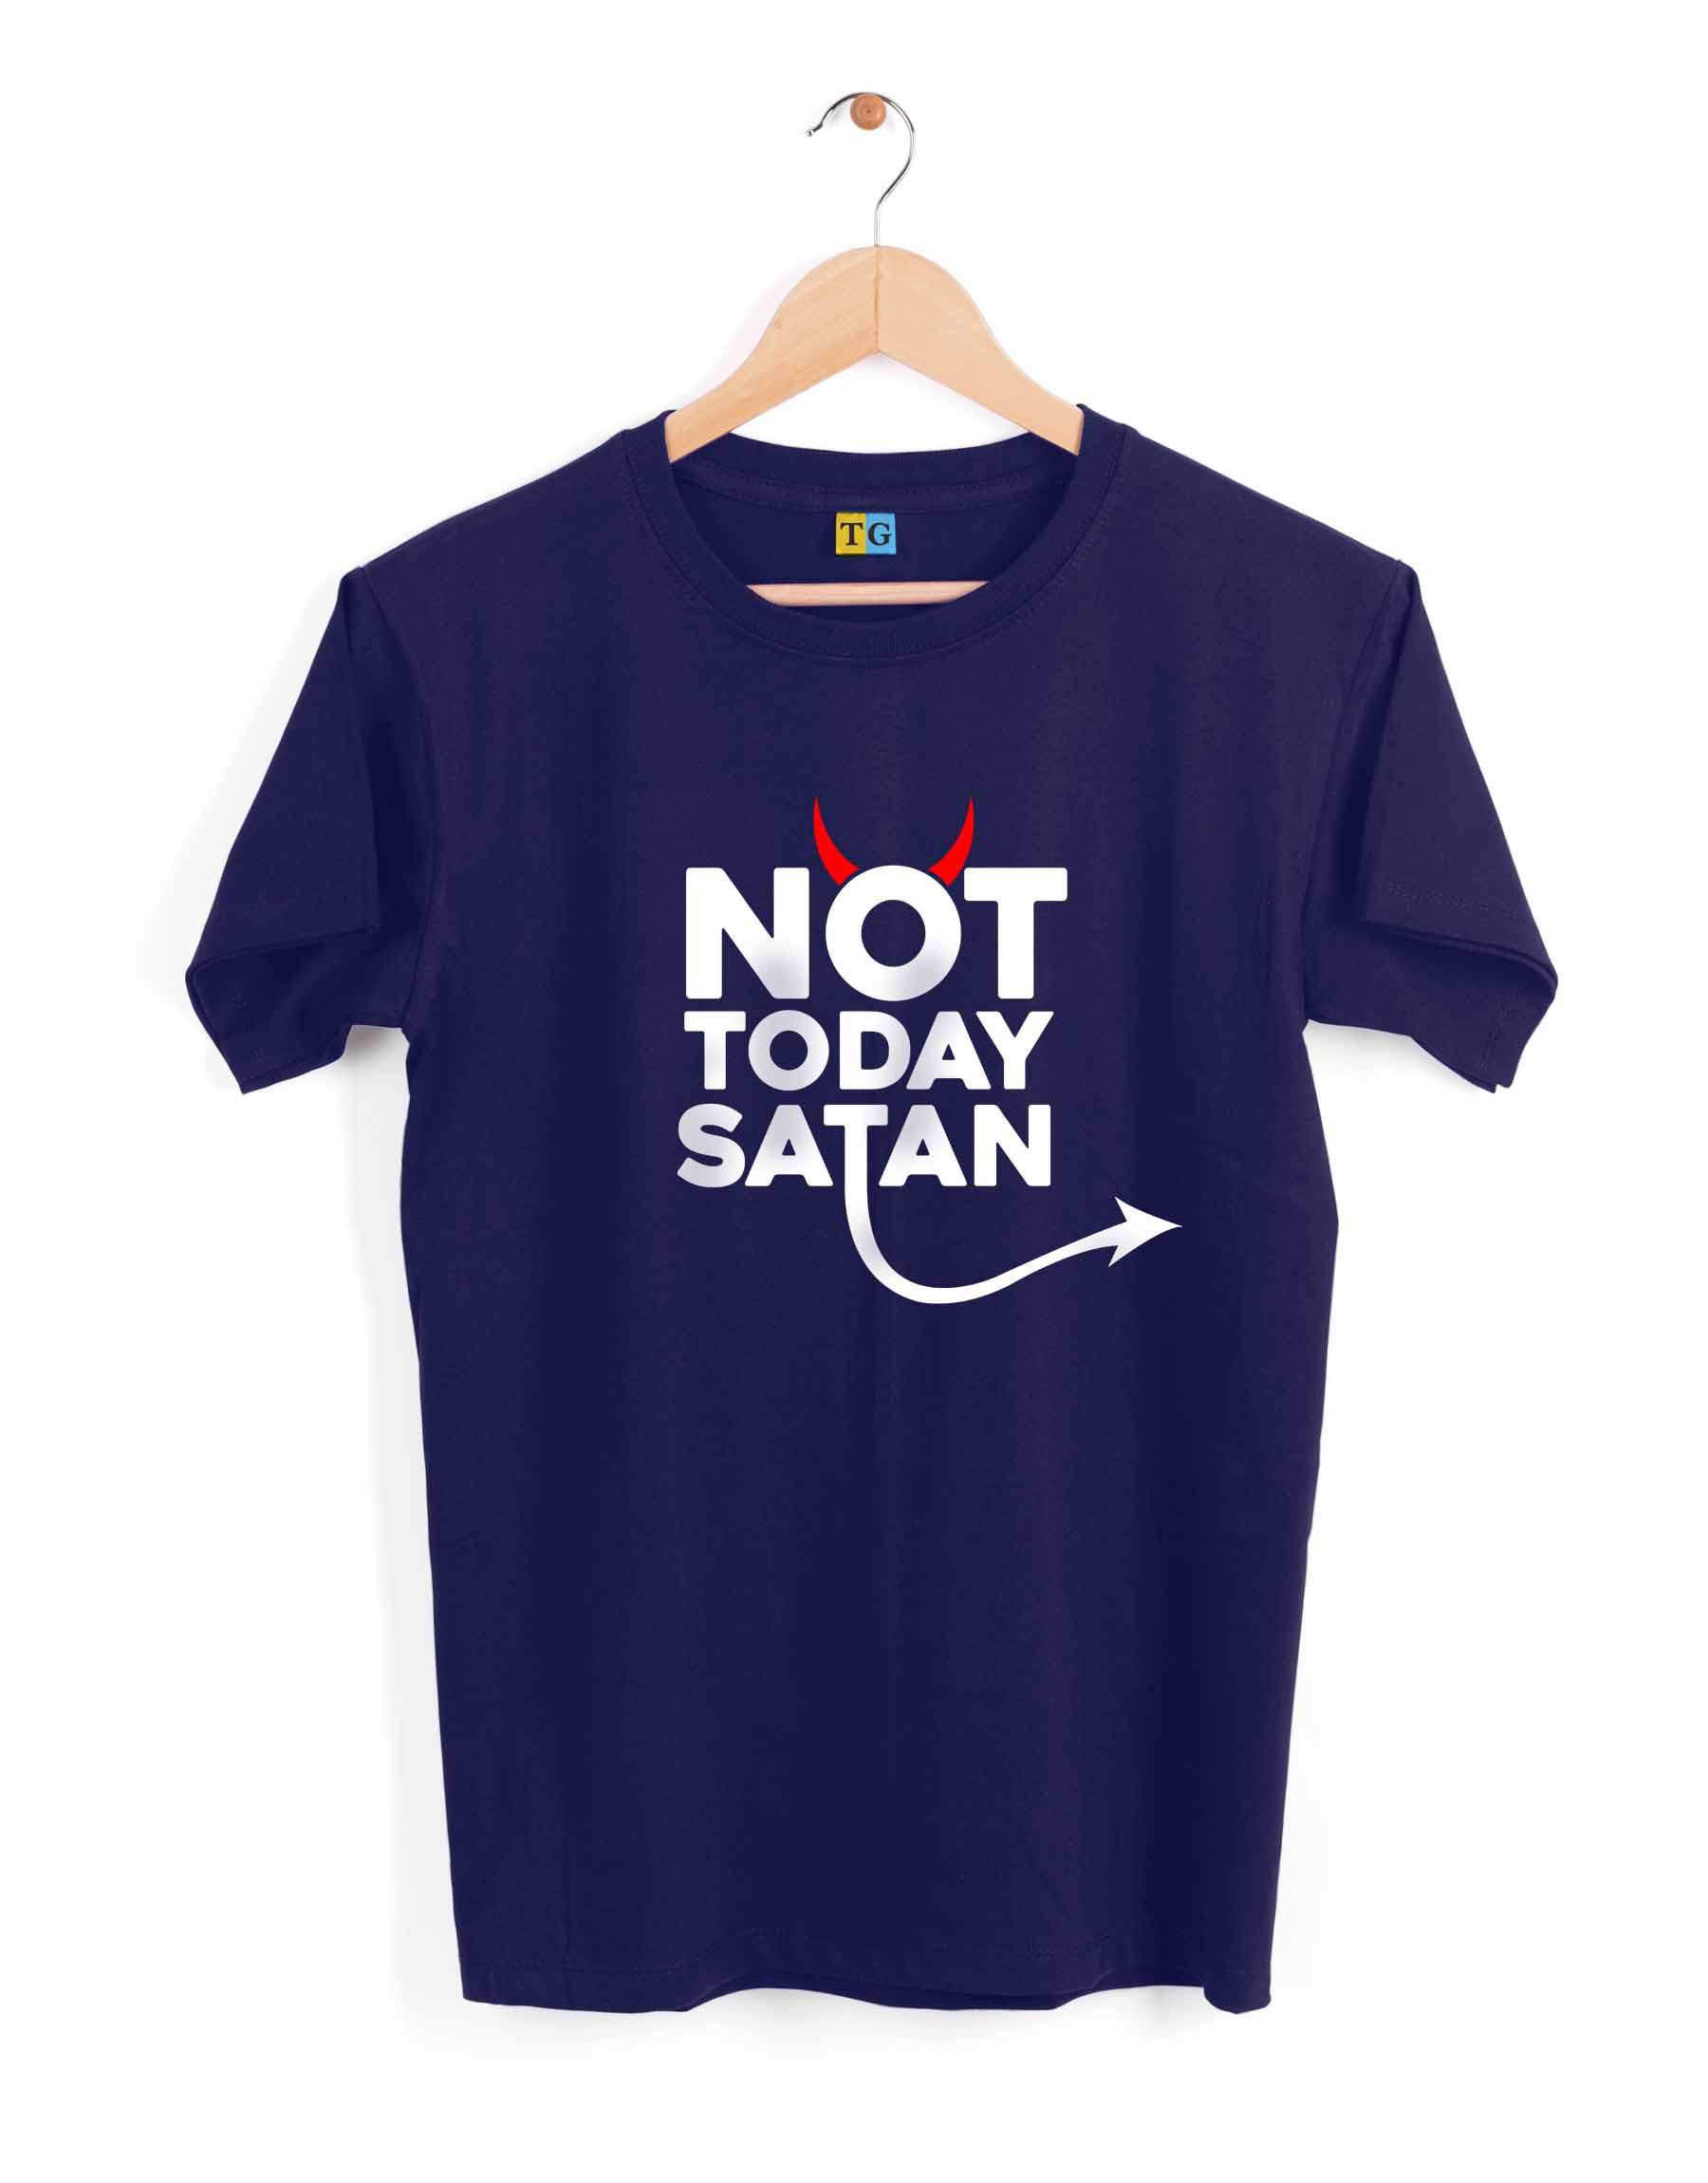 Not Today Satan Printed T-Shirt - 499.00 - TEEGURUJI - Free Shipping